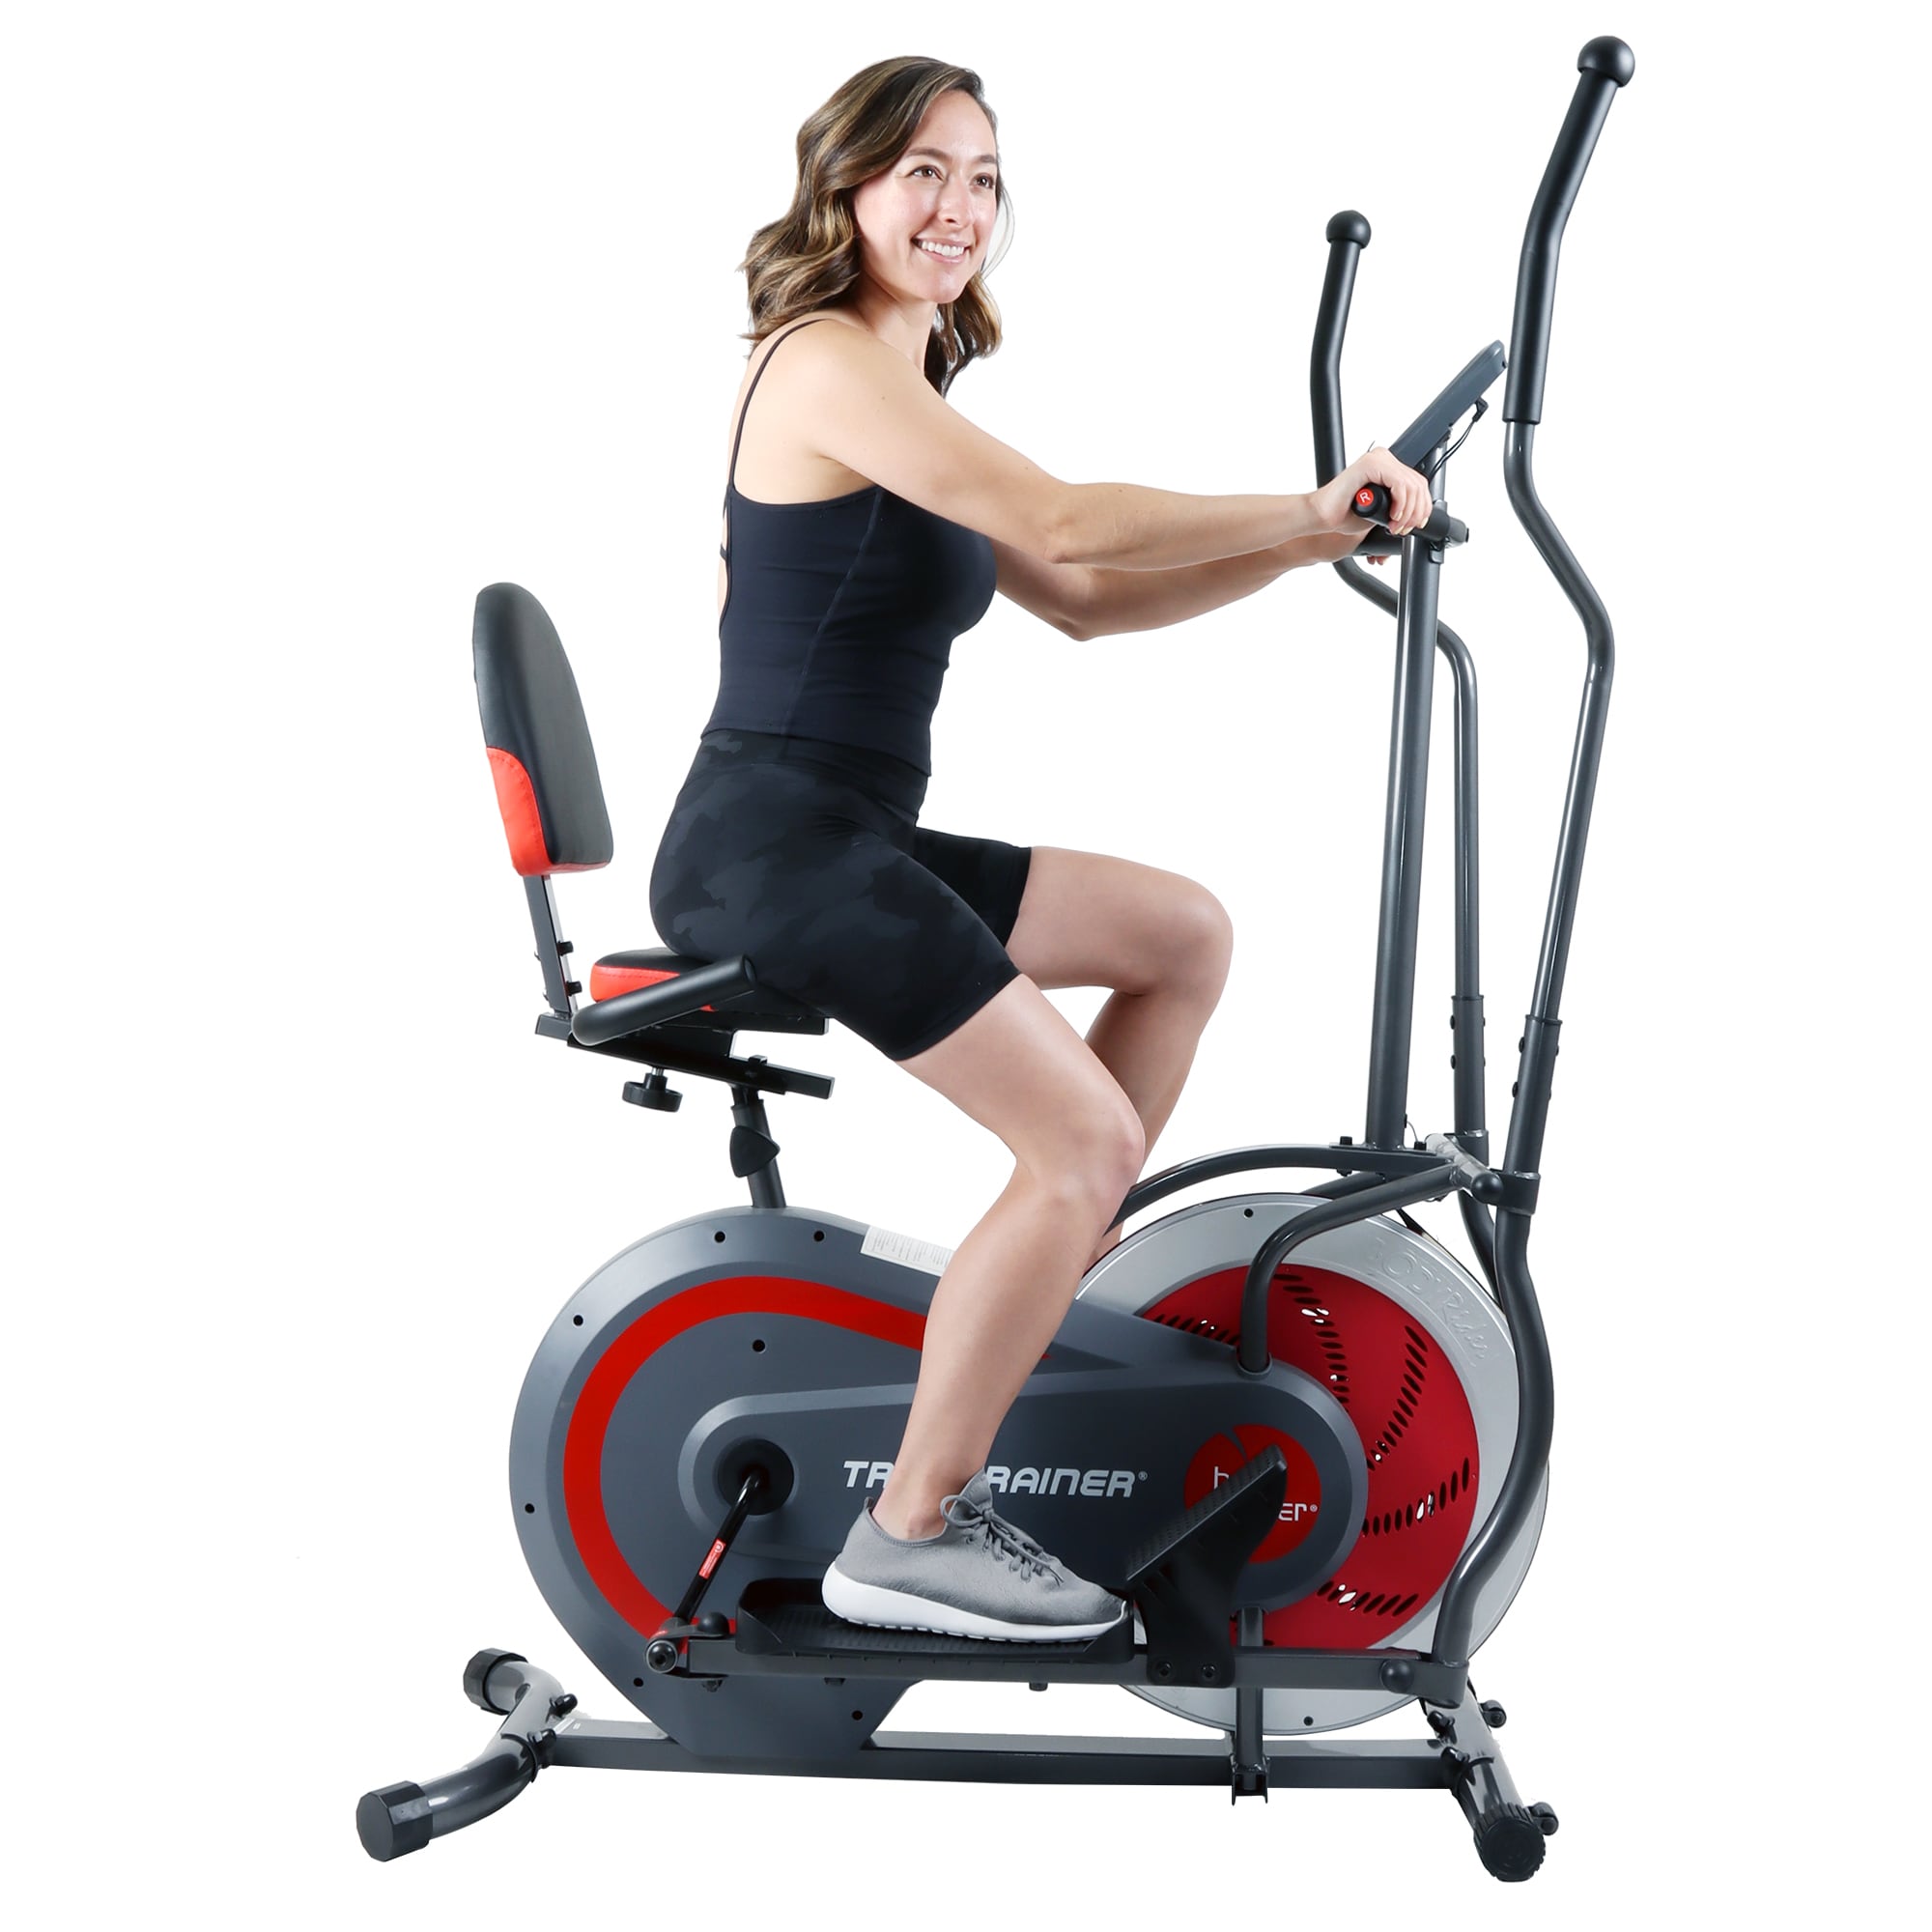 Body Flex Sports Trio-Trainer Magnetic Recumbent Cycle Exercise